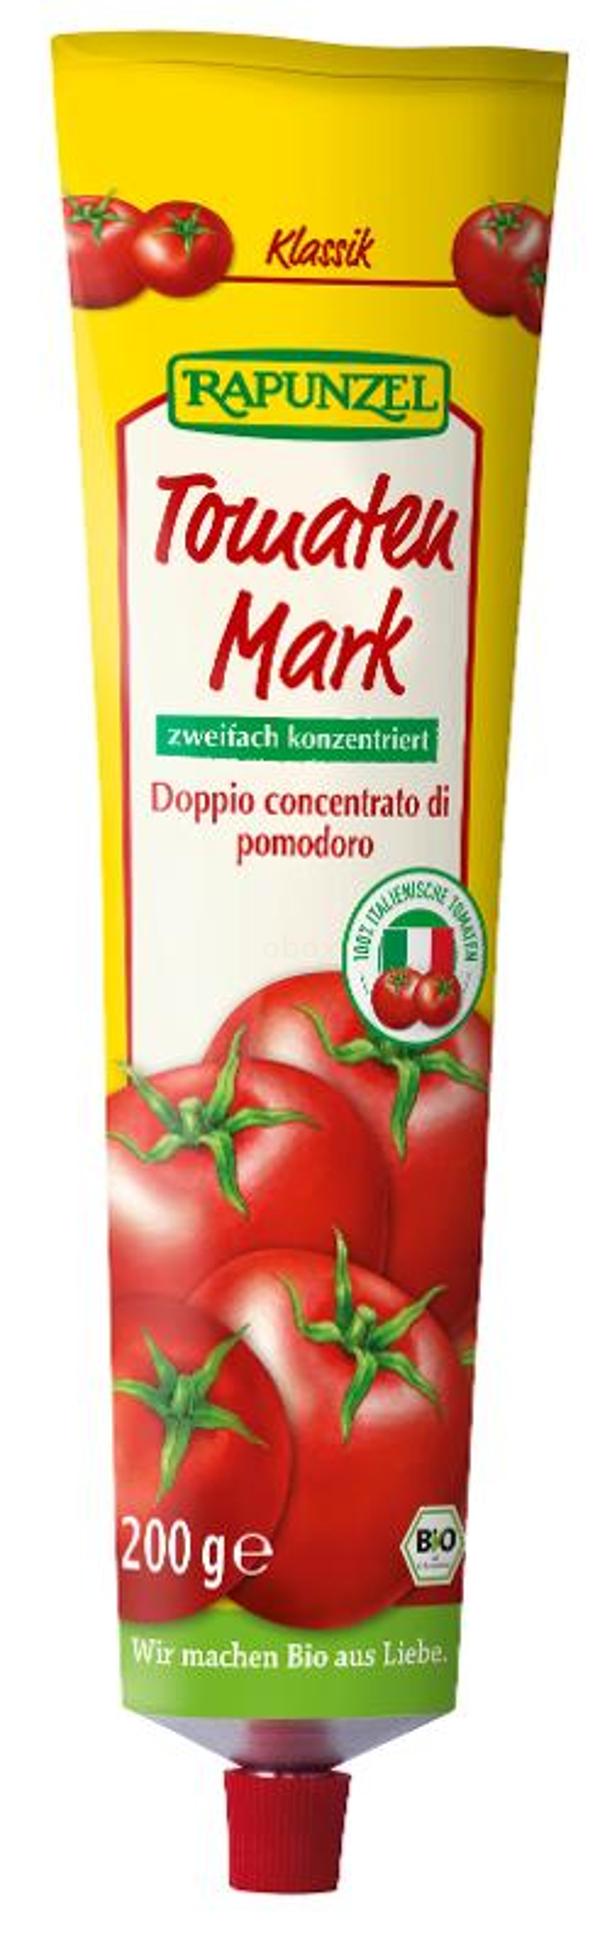 Produktfoto zu Tomatenmark in Tube 200g